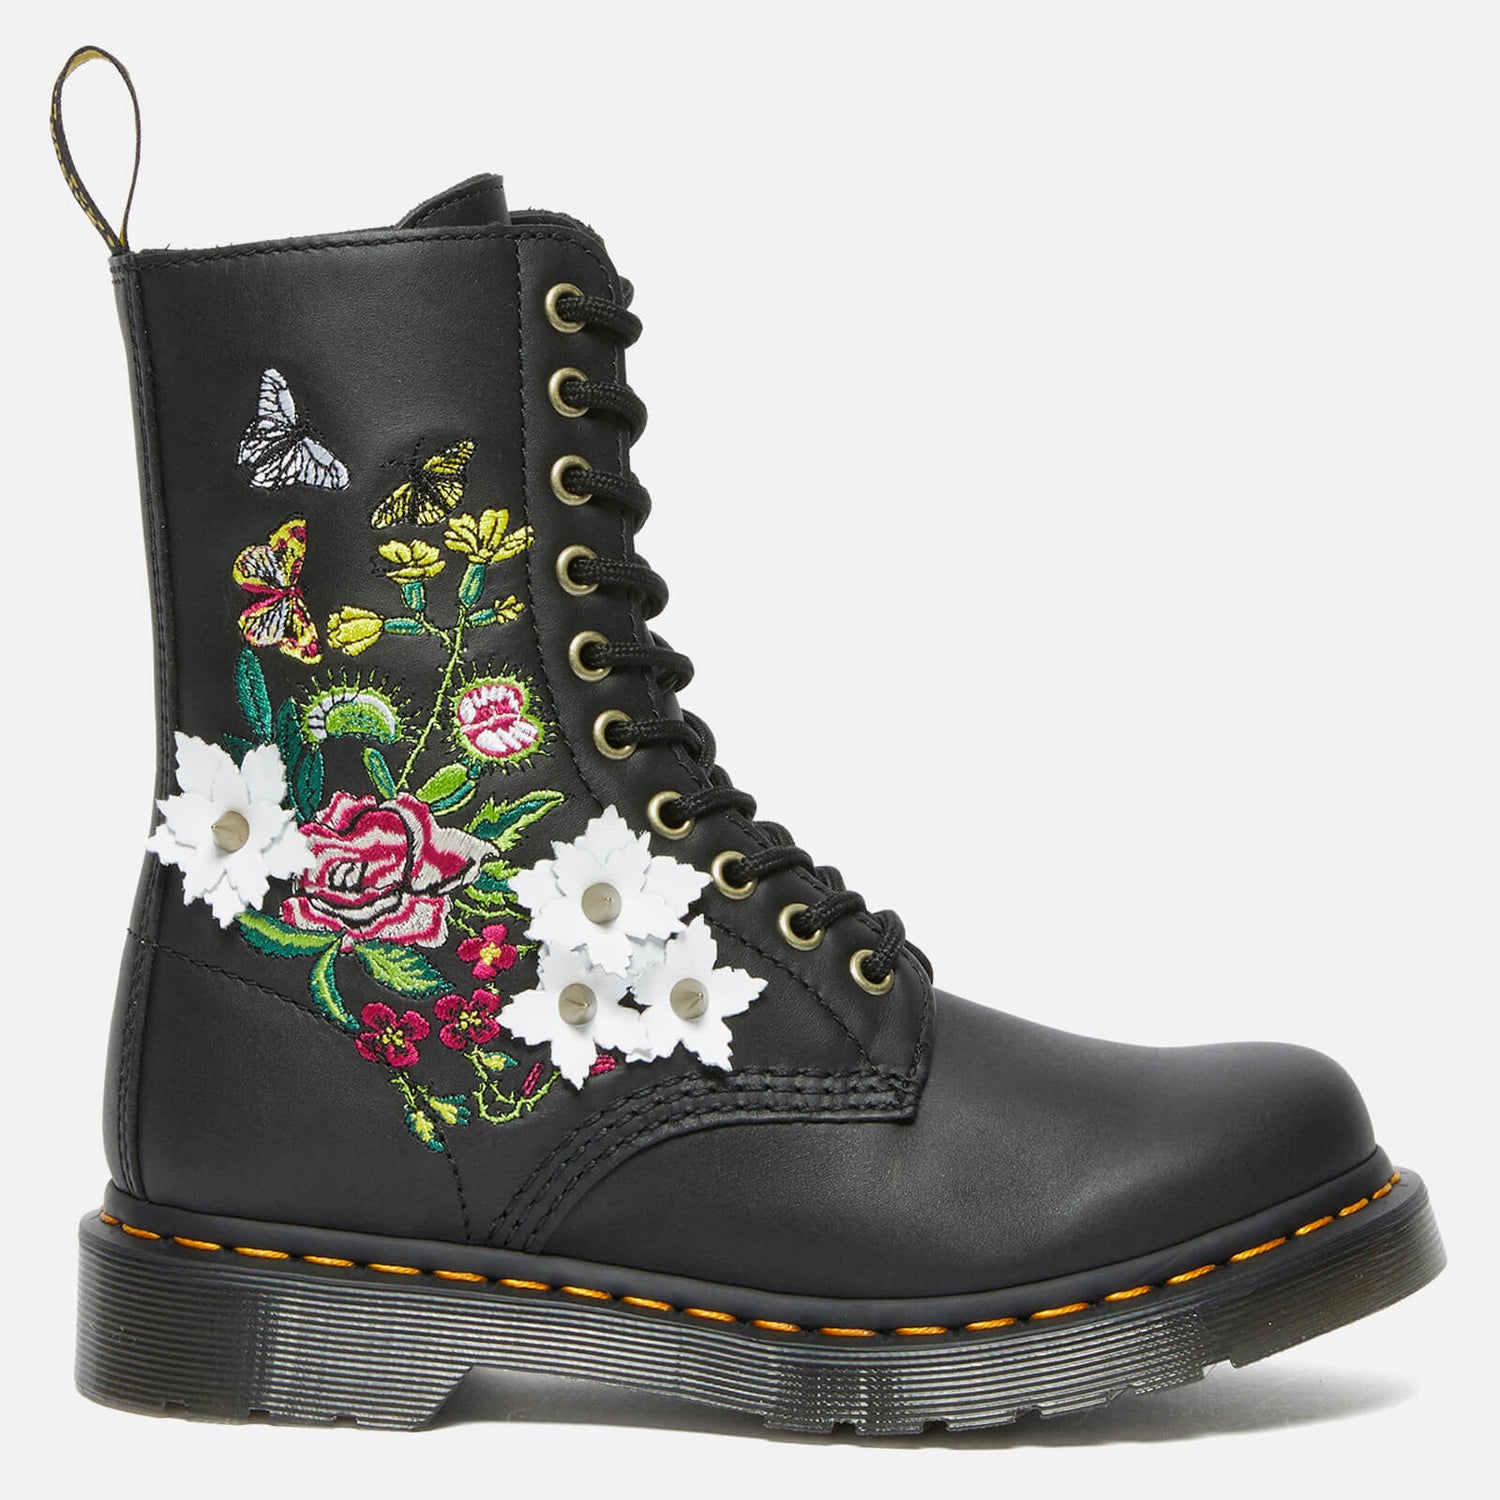 Dr. Martens Women's 1490 Bloom Leather 10-Eye Boots - Black - UK 3